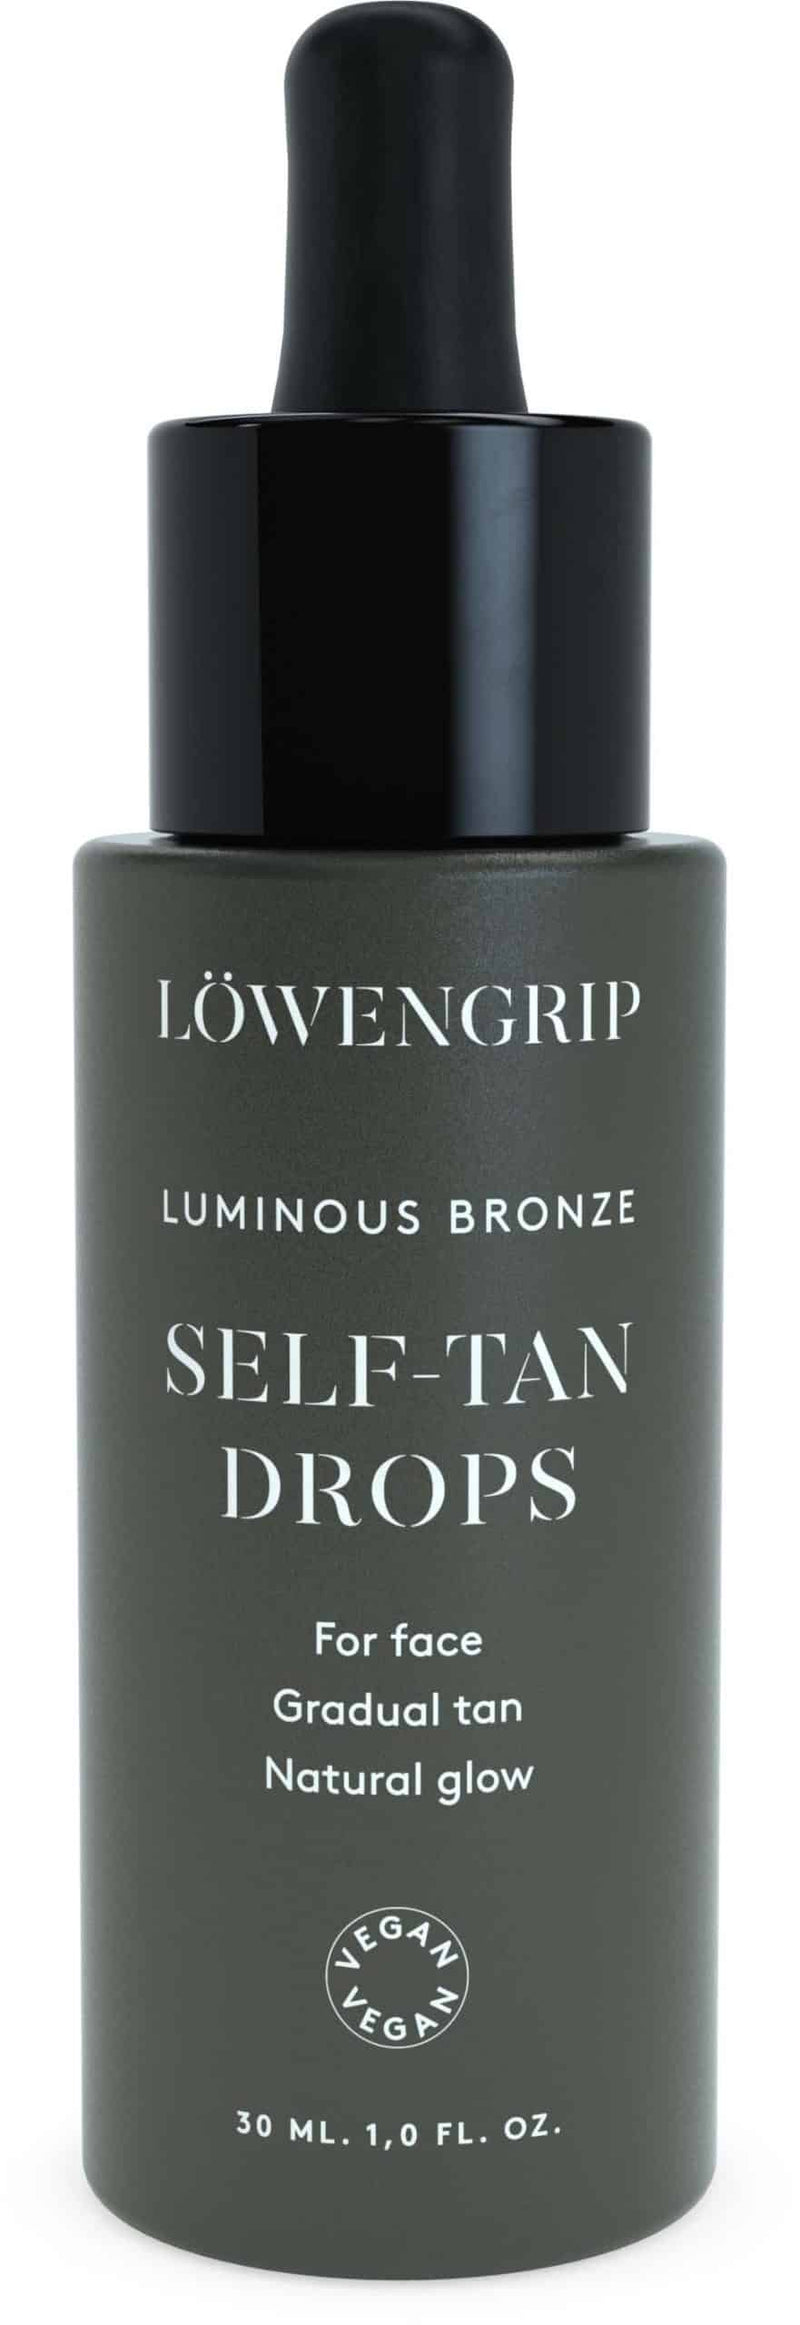 Löwengrip Luminous Bronze Self-tanning drops for the face (30 ml)